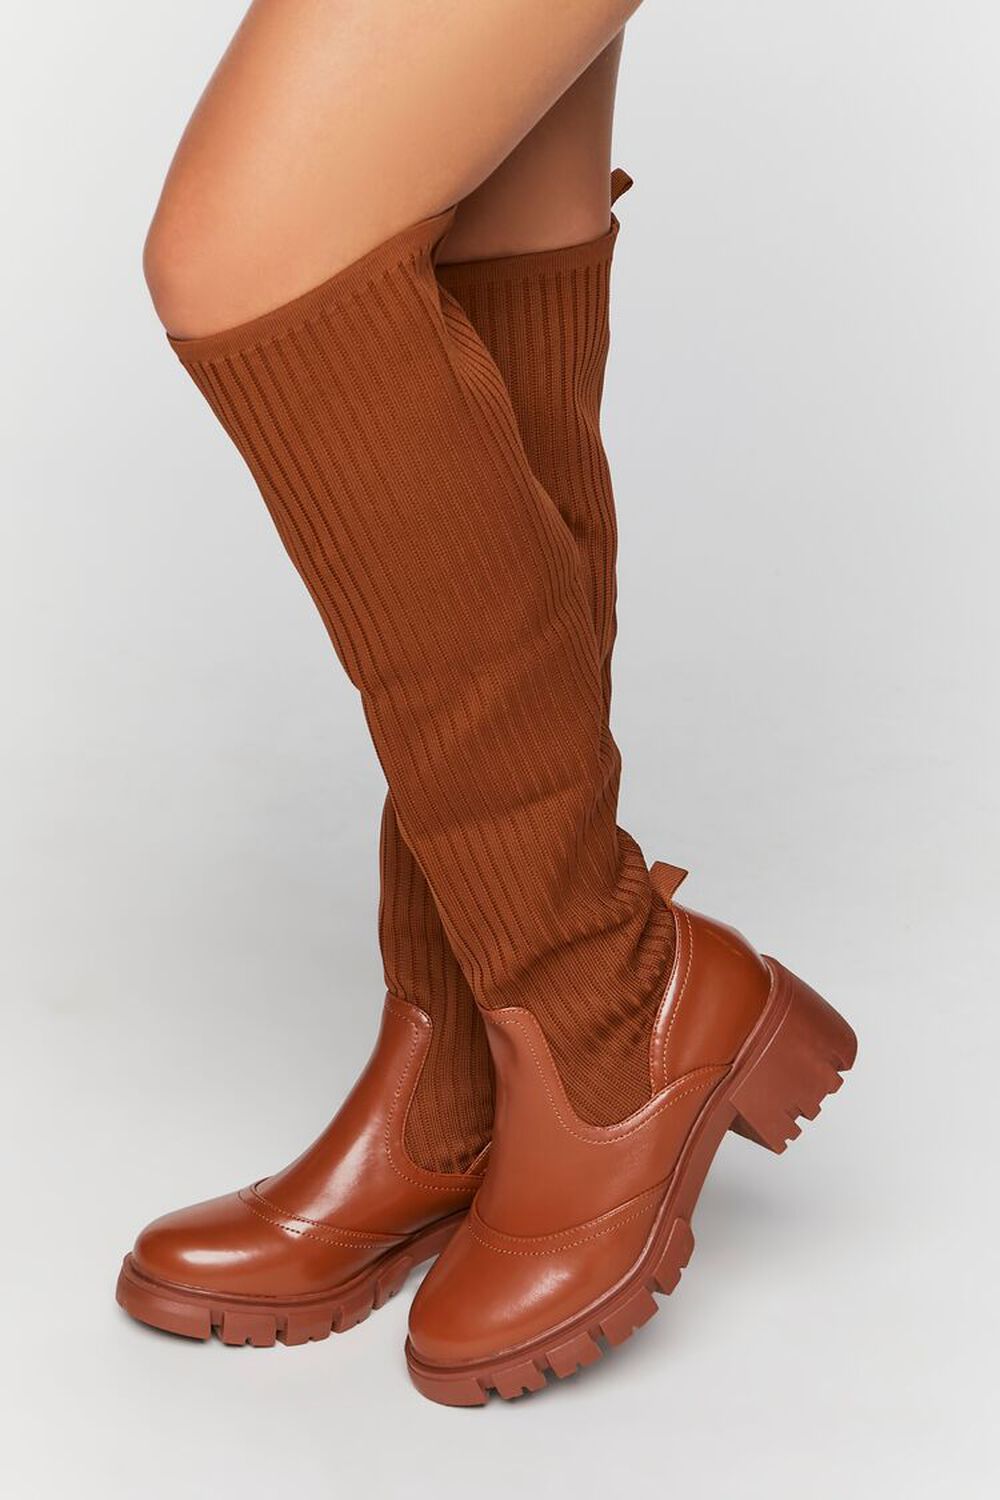 BROWN Ribbed Over-the-Knee Lug Boots, image 1